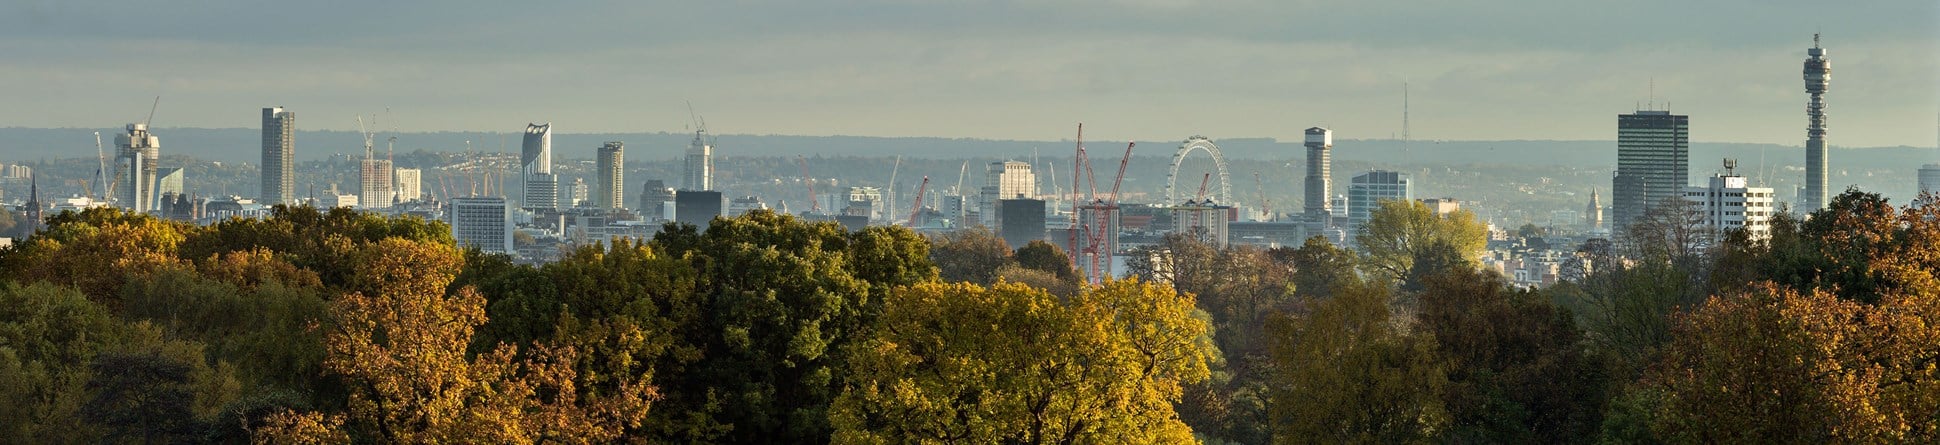 View of london skyline